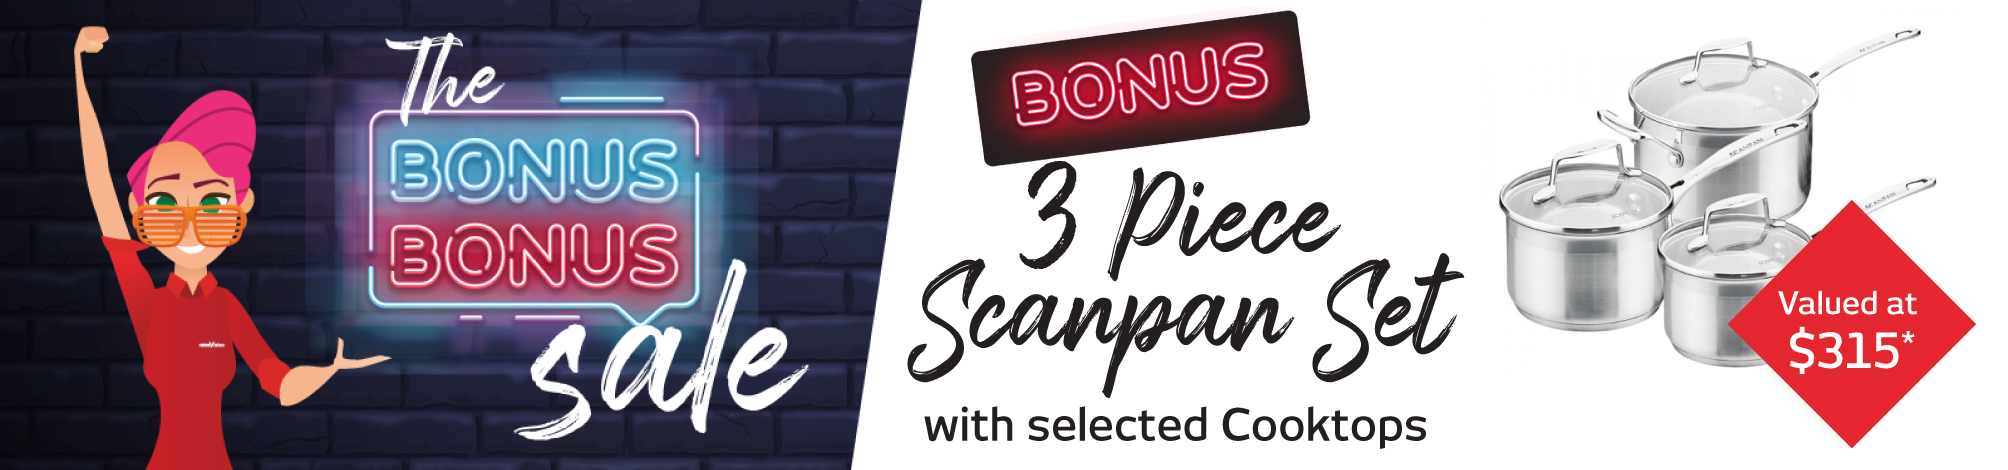 Bonus 3 Piece Scanpan Set